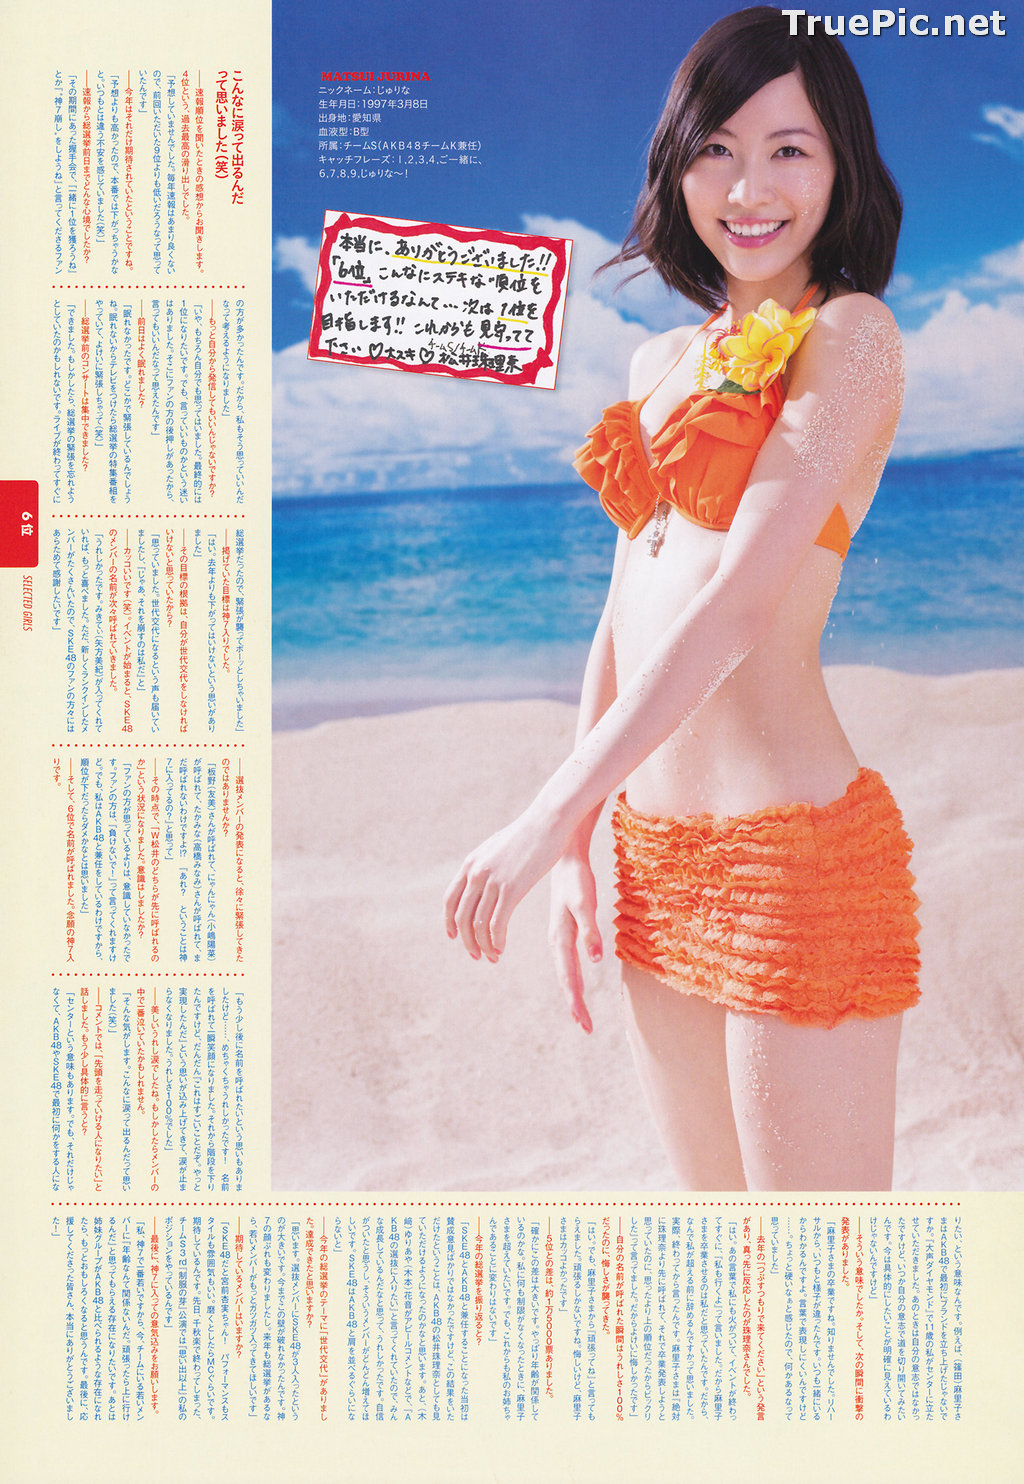 Image AKB48 General Election! Swimsuit Surprise Announcement 2013 - TruePic.net - Picture-26